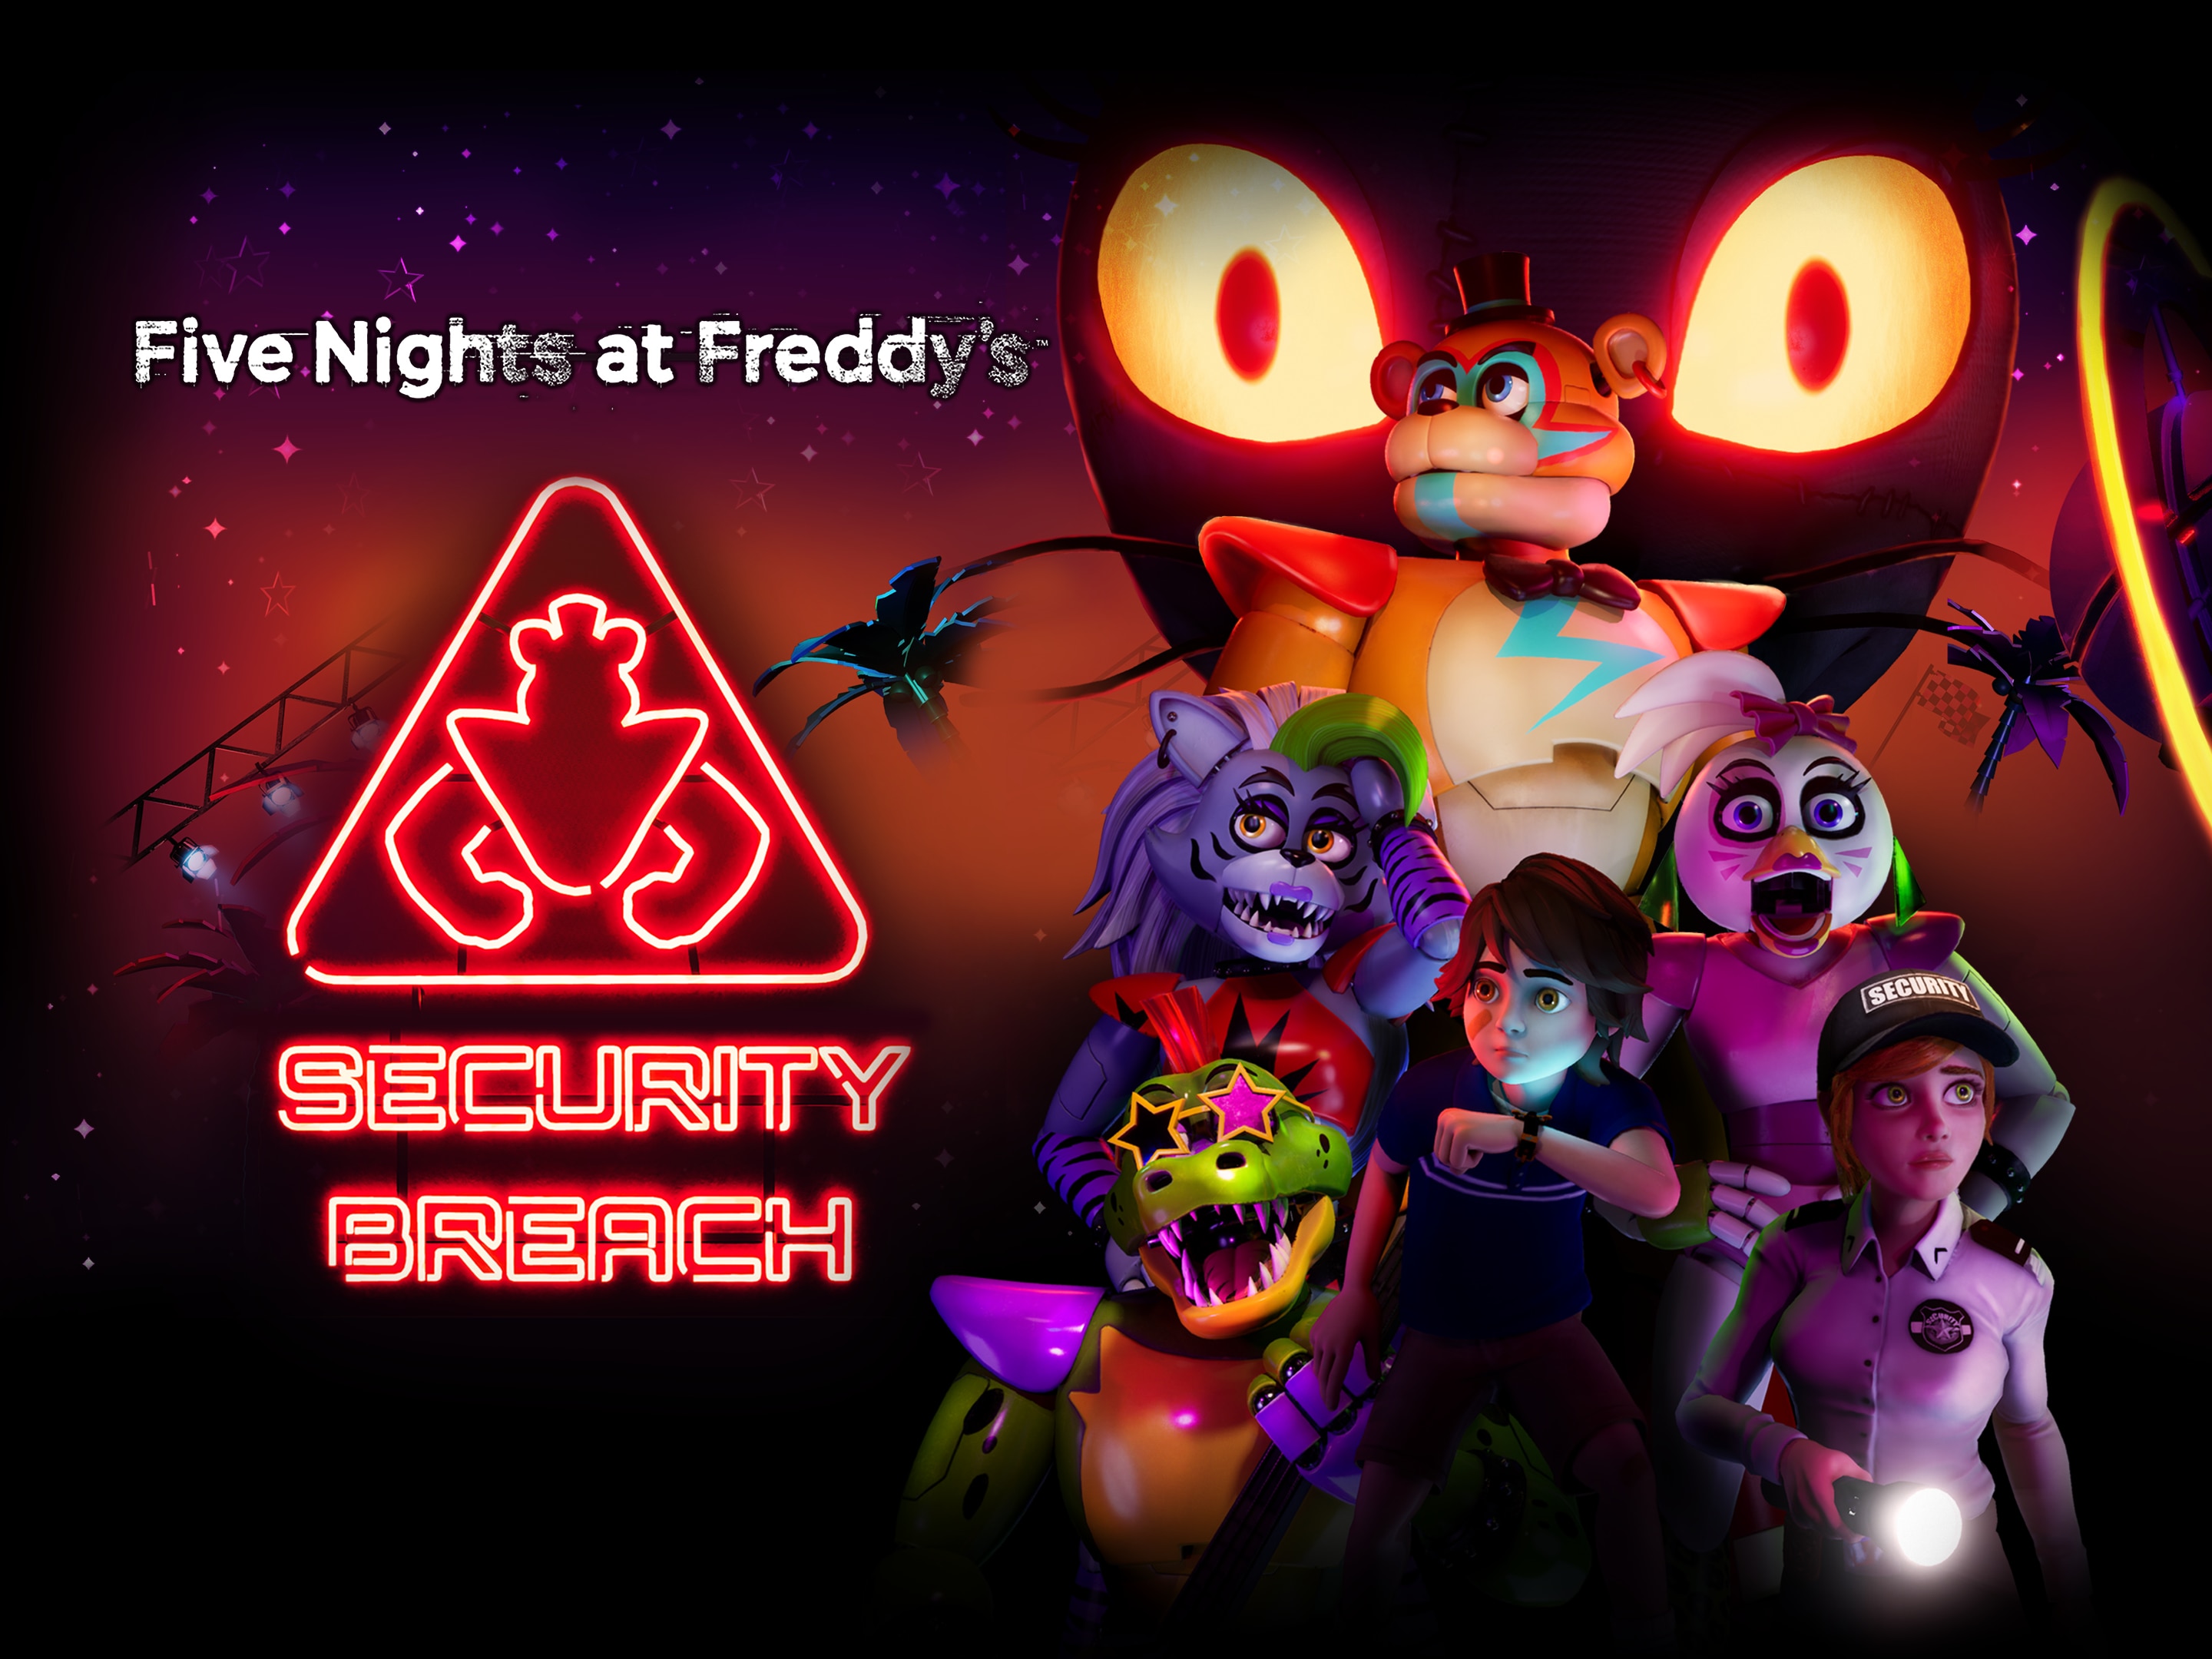 Завантажити шпалери Five Nights At Freddy's: Security Break на телефон безкоштовно